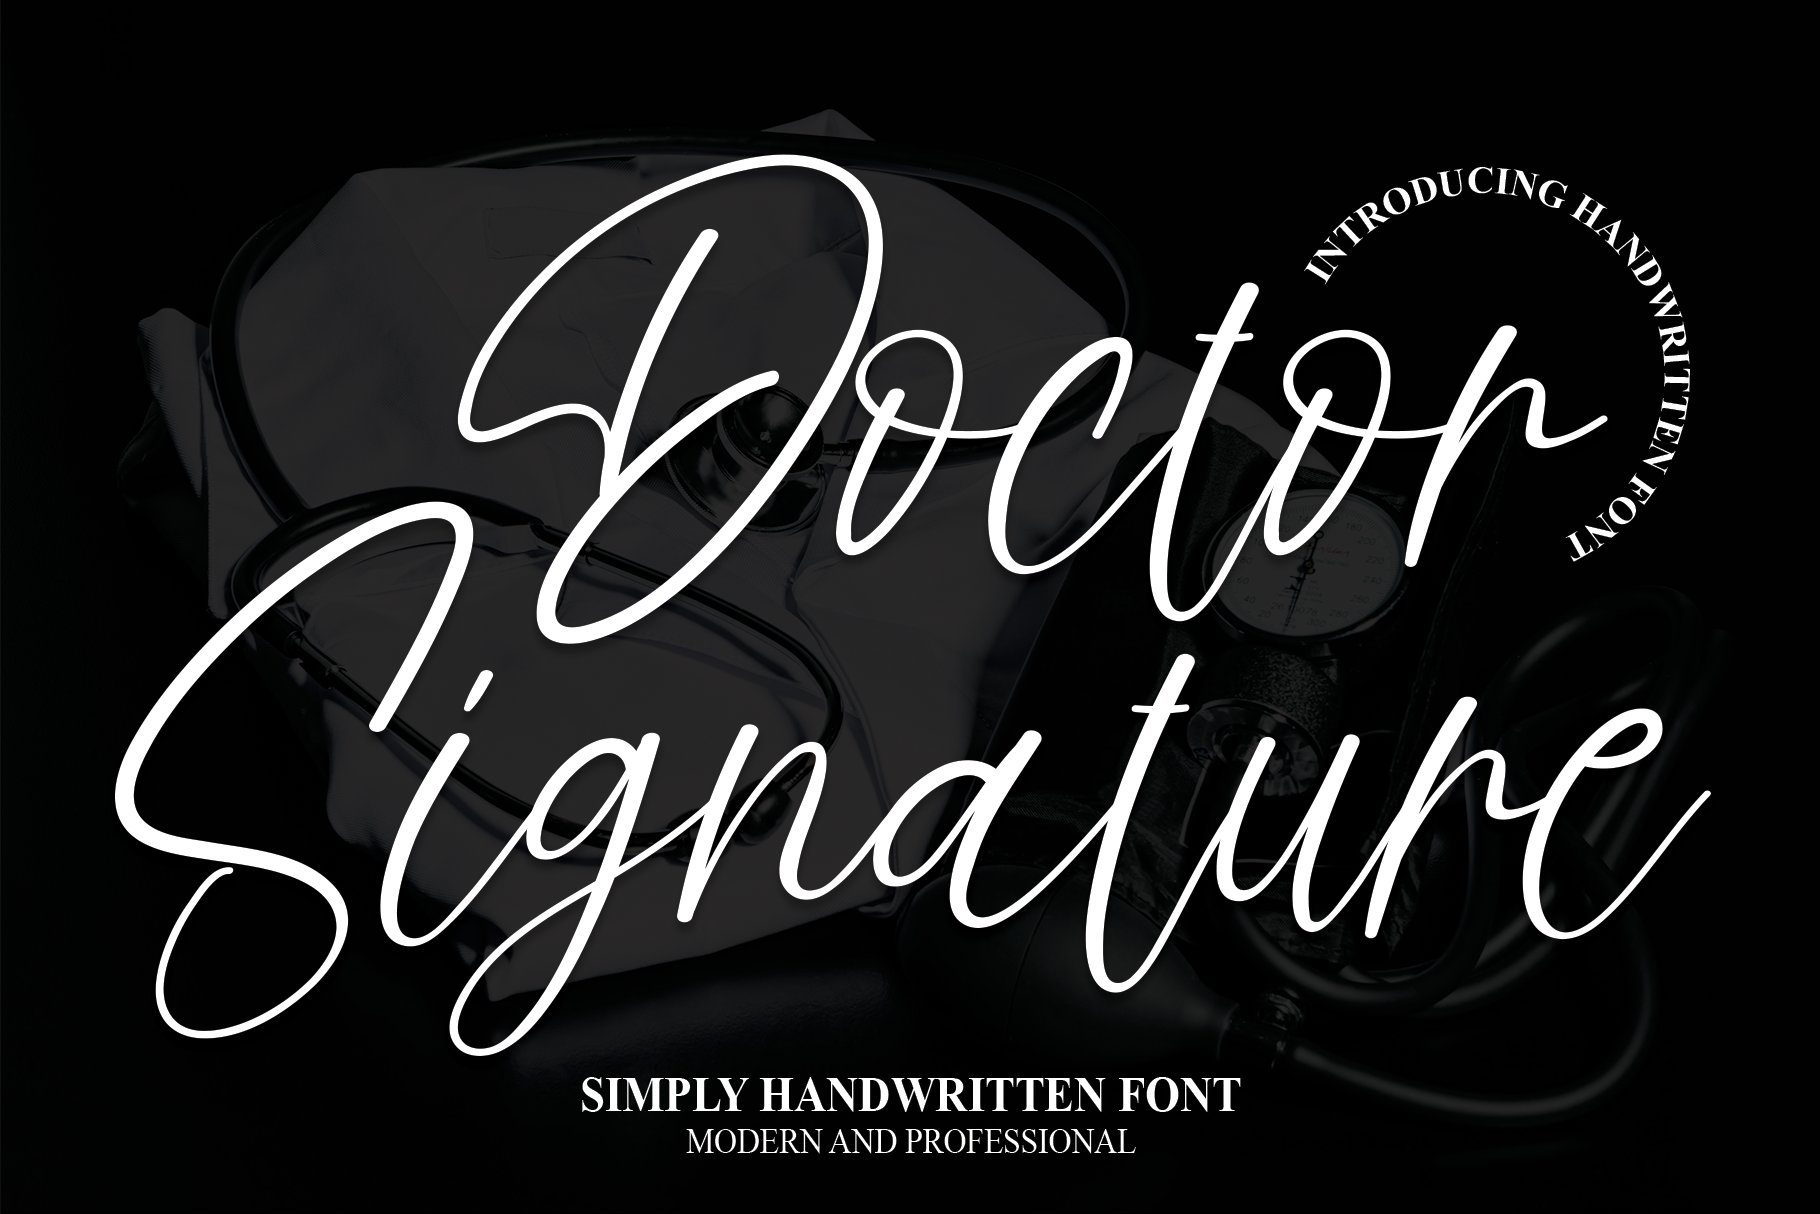 Doctor Signature | Script Font cover image.